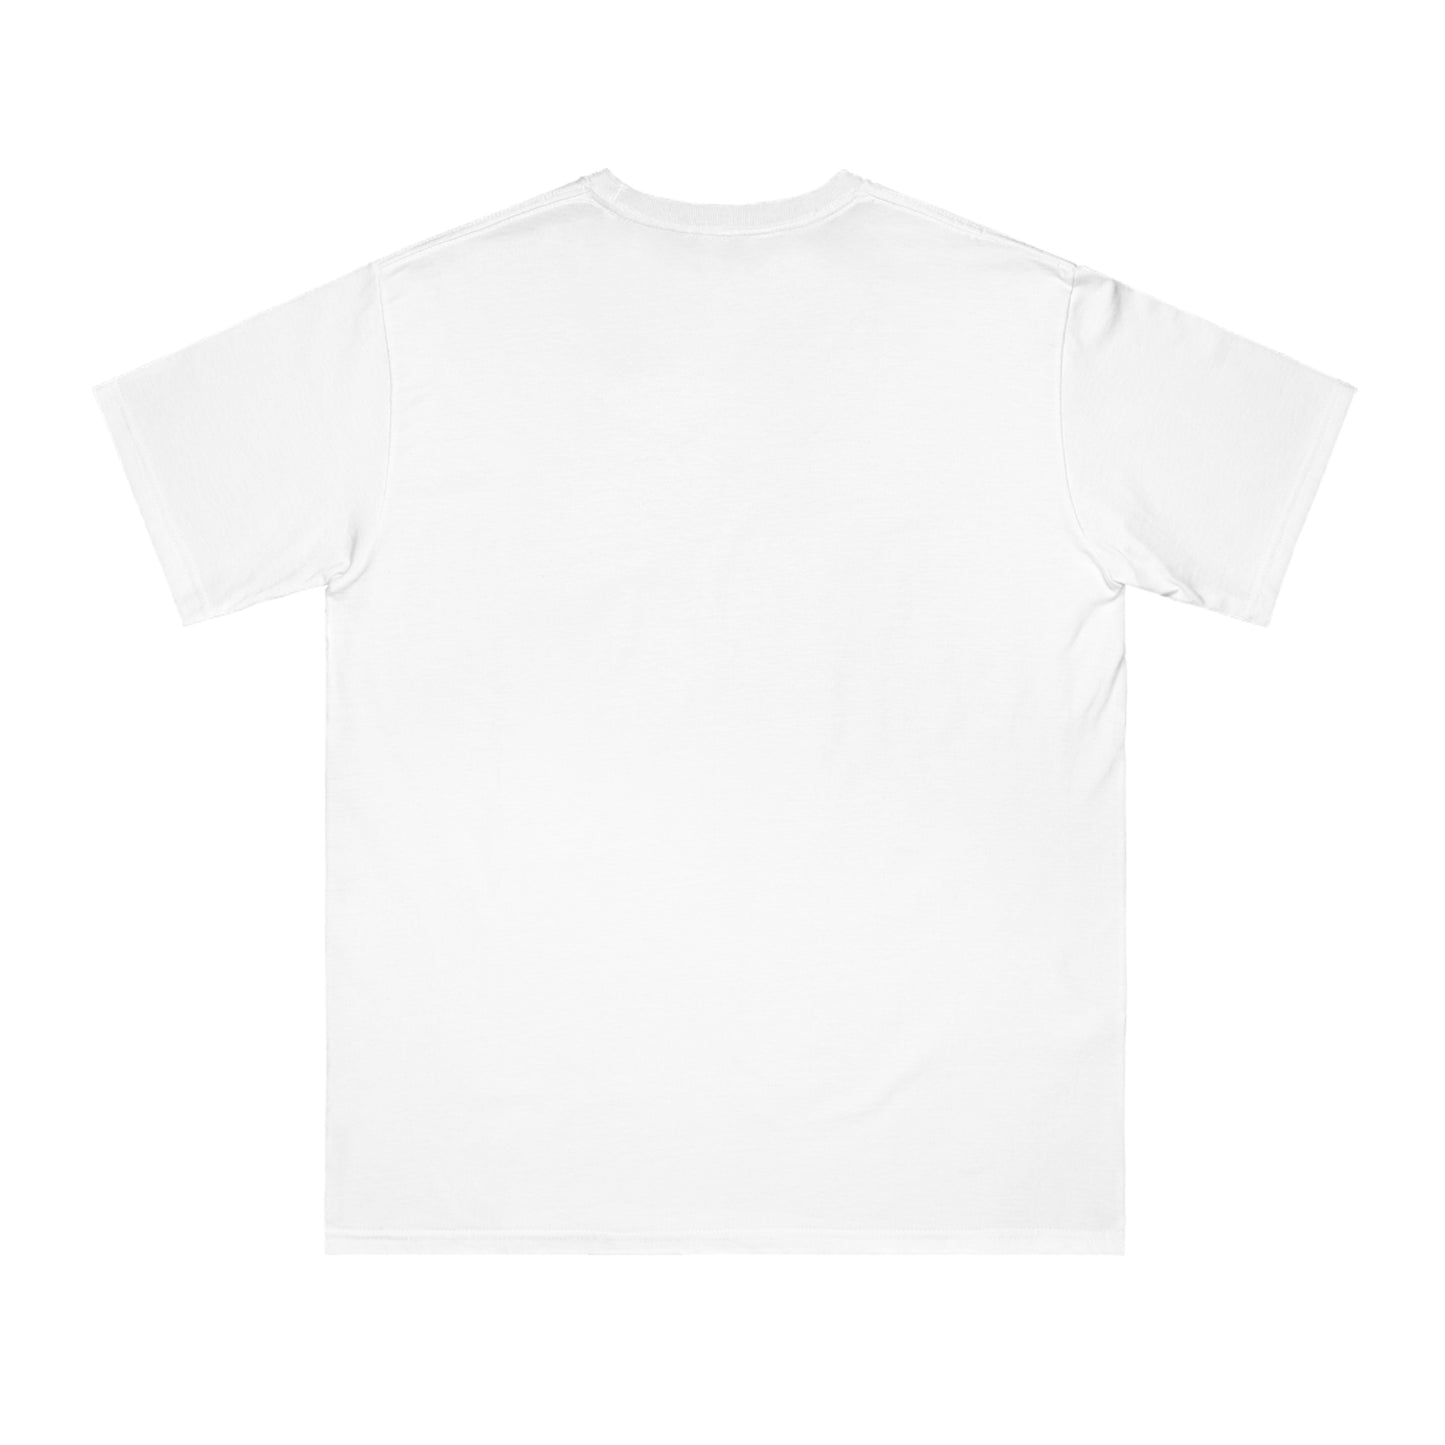 Detroit '313' T-Shirt (Athletic Font) | Organic Unisex